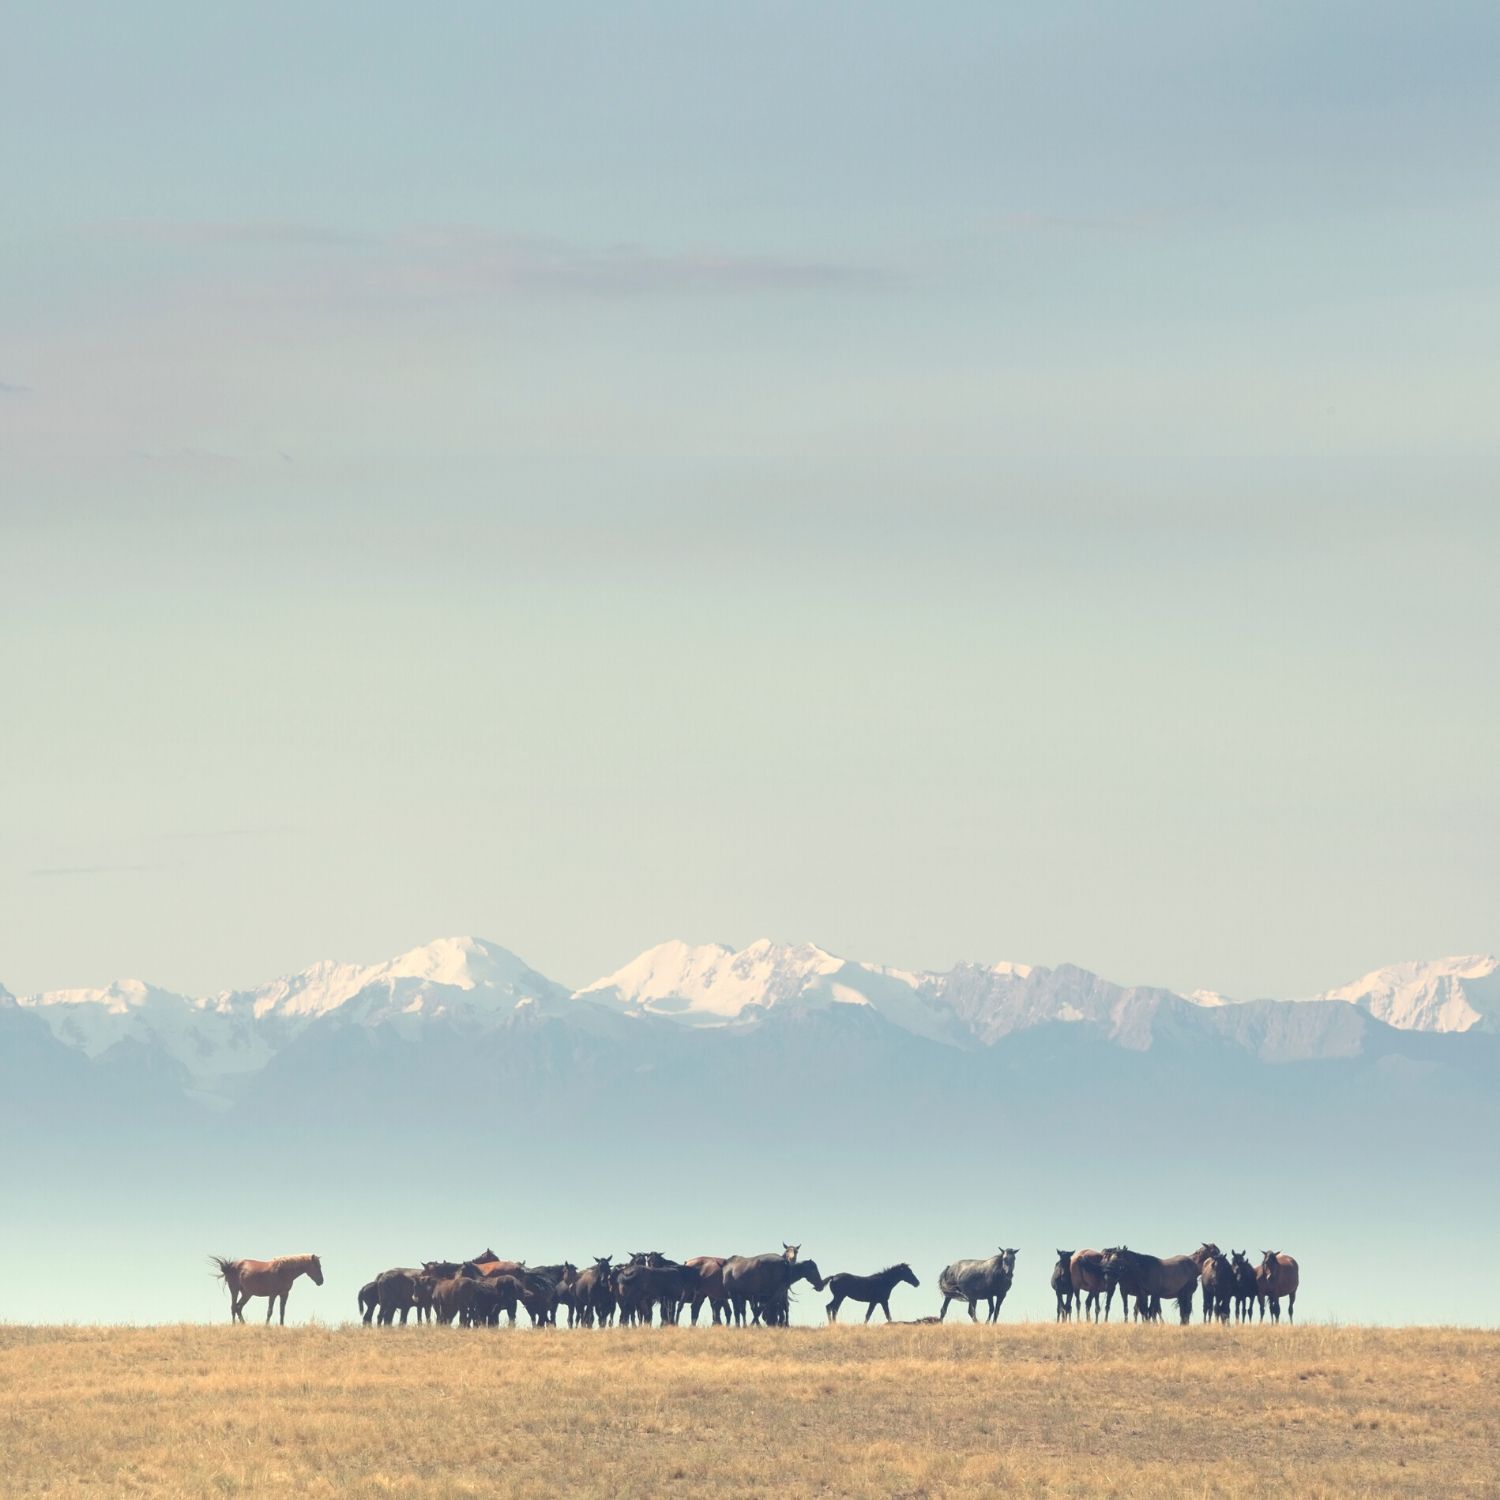 Central Asia & the Silk Road Photography Tour to Kyrgyzstan Tajikistan and Uzbekistan with award-winning travel photographer Ignacio Palacios